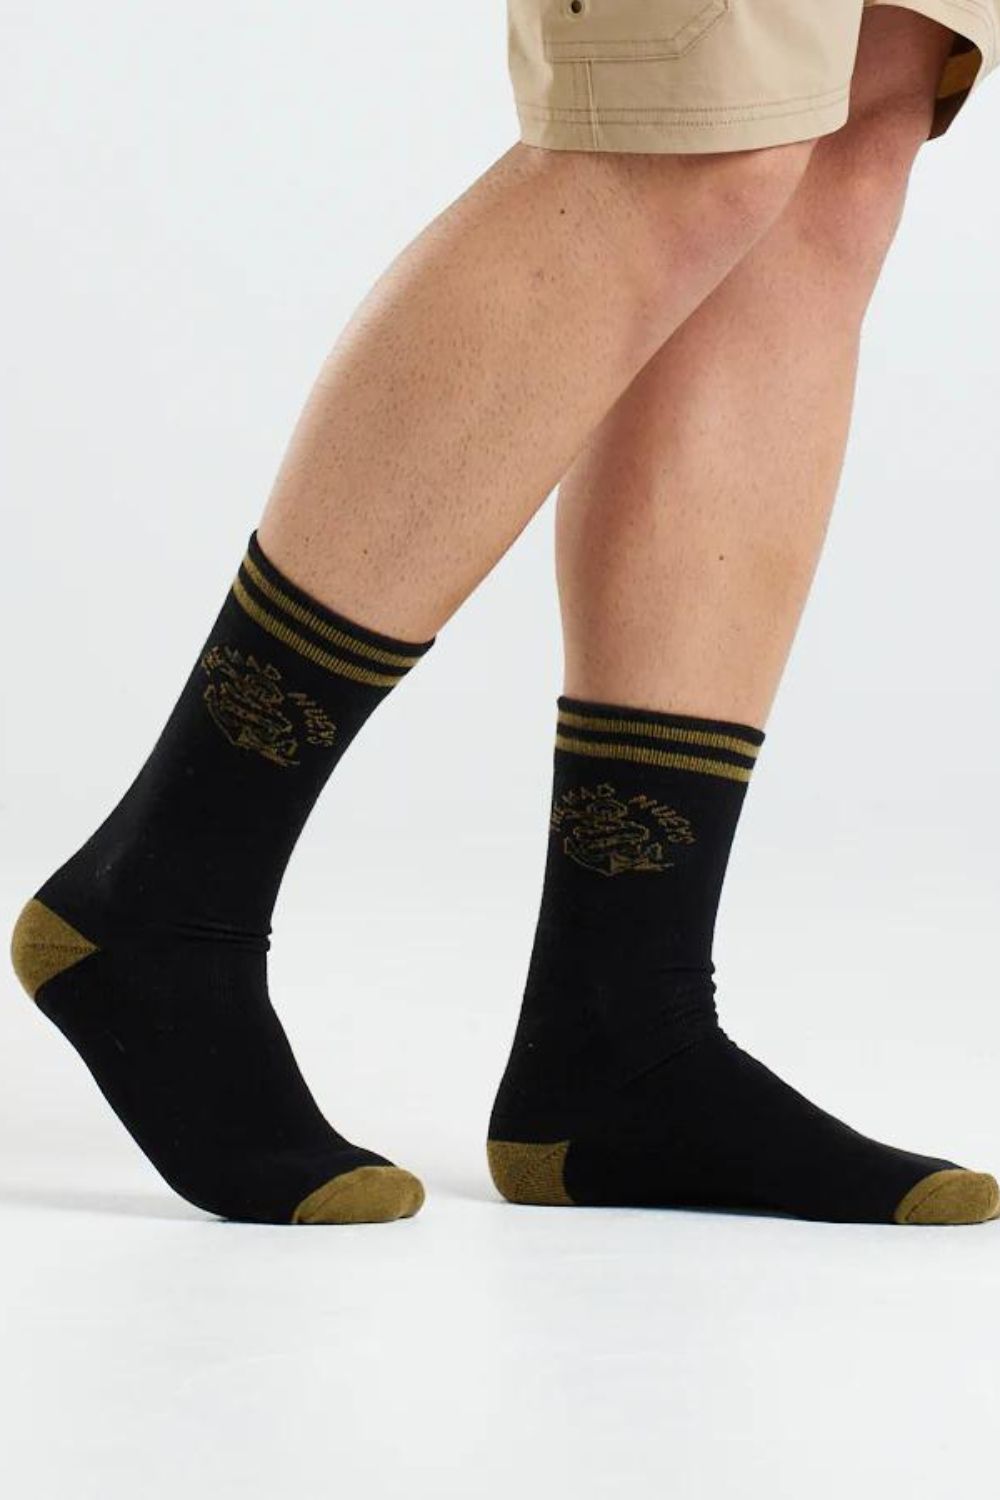 The Mad Hueys Anchorage Socks